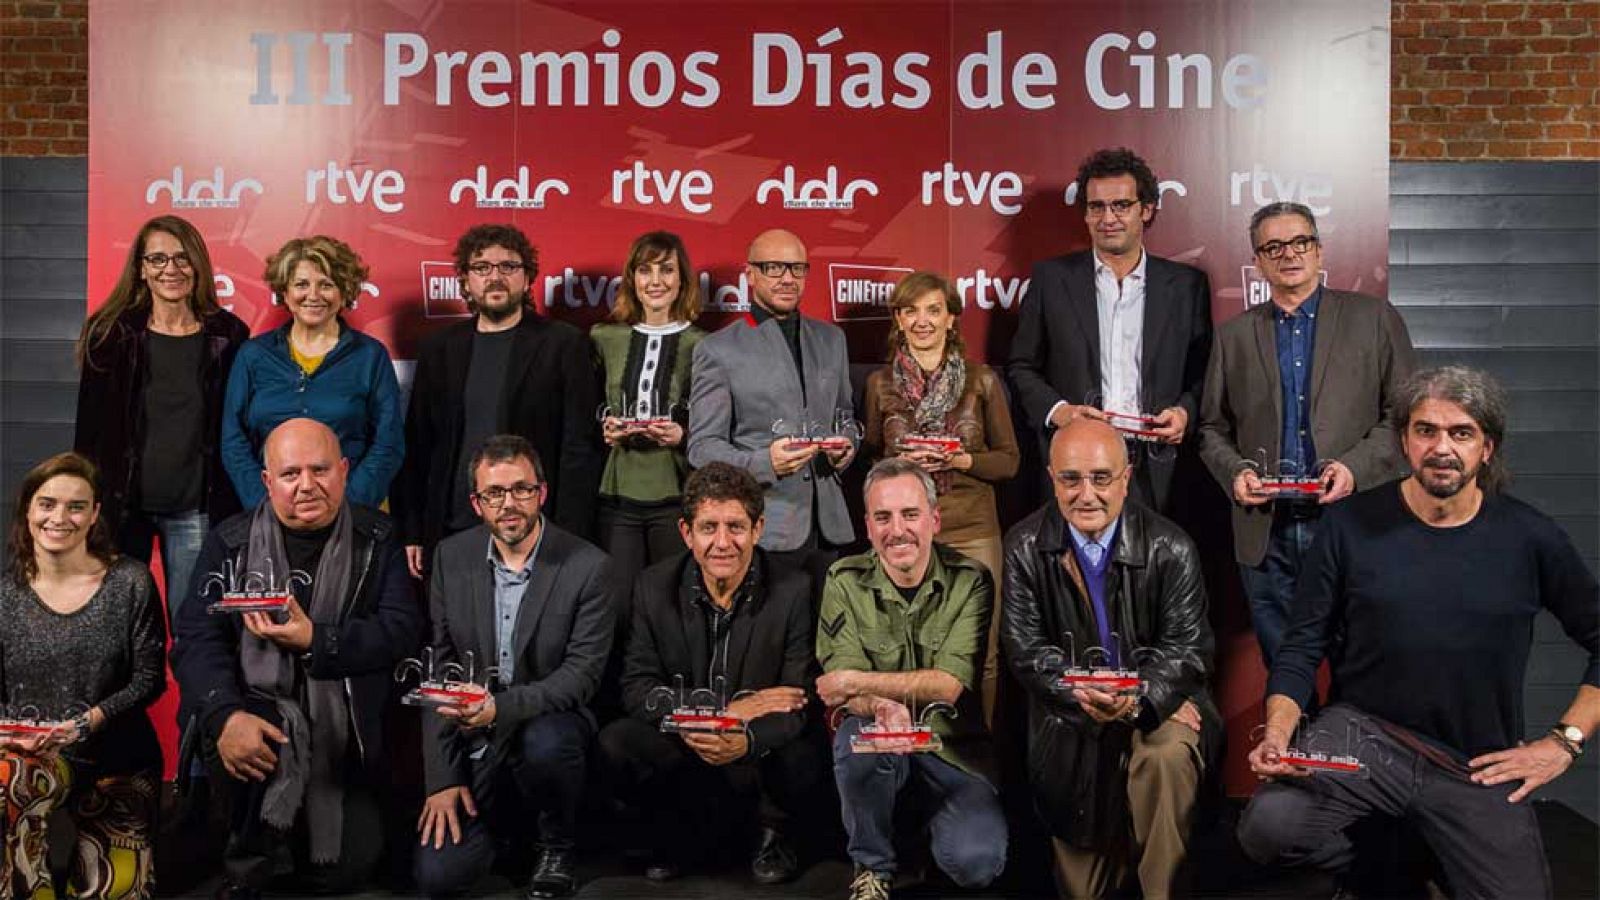 Días de Cine - III Premios Días de Cine